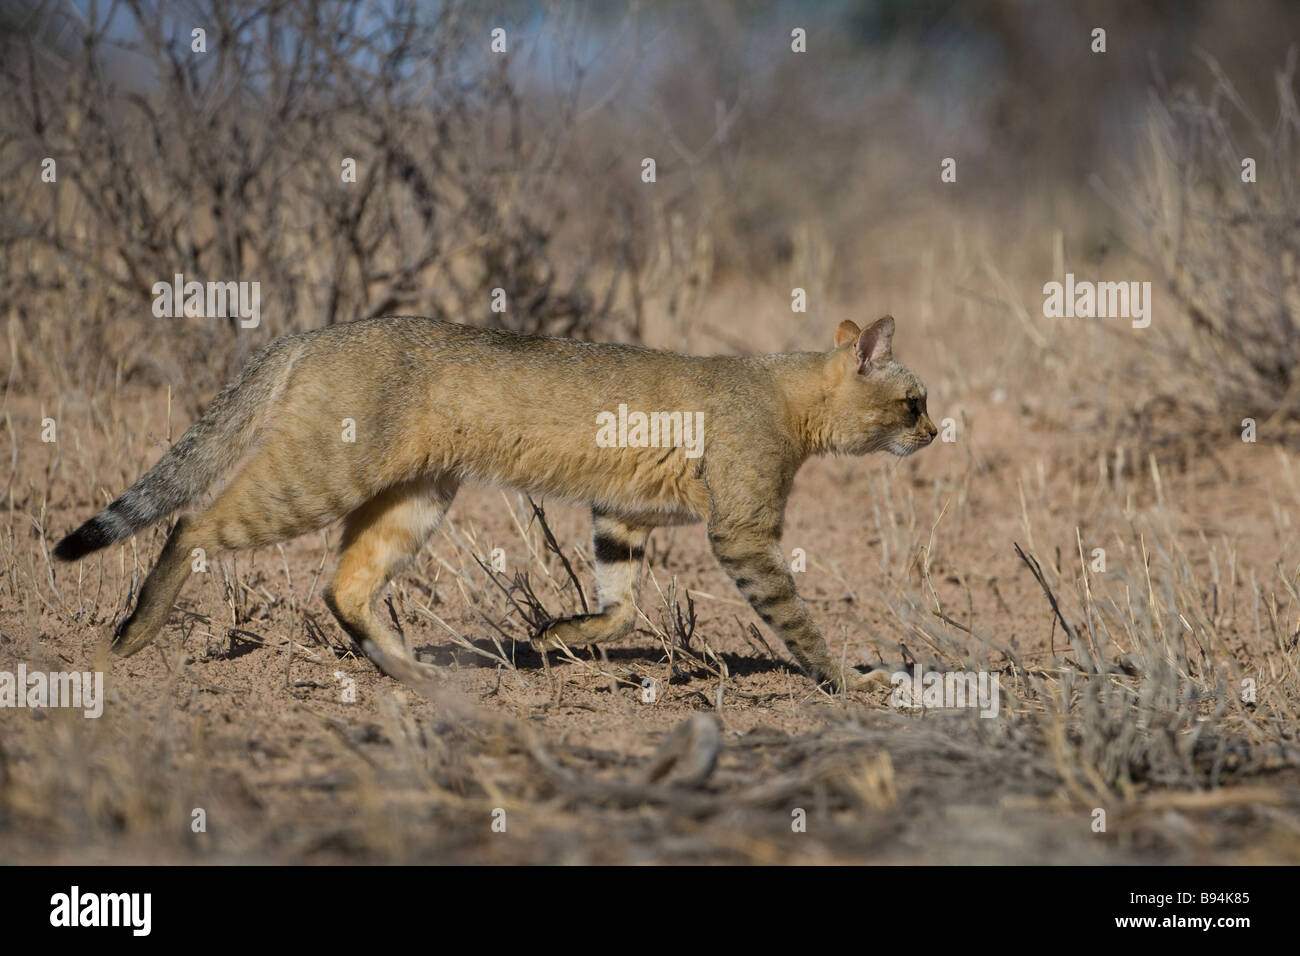 Afrikanische Wildkatze Felis Silvestris Lybica Kgalagadi Transfrontier Park in Südafrika Stockfoto